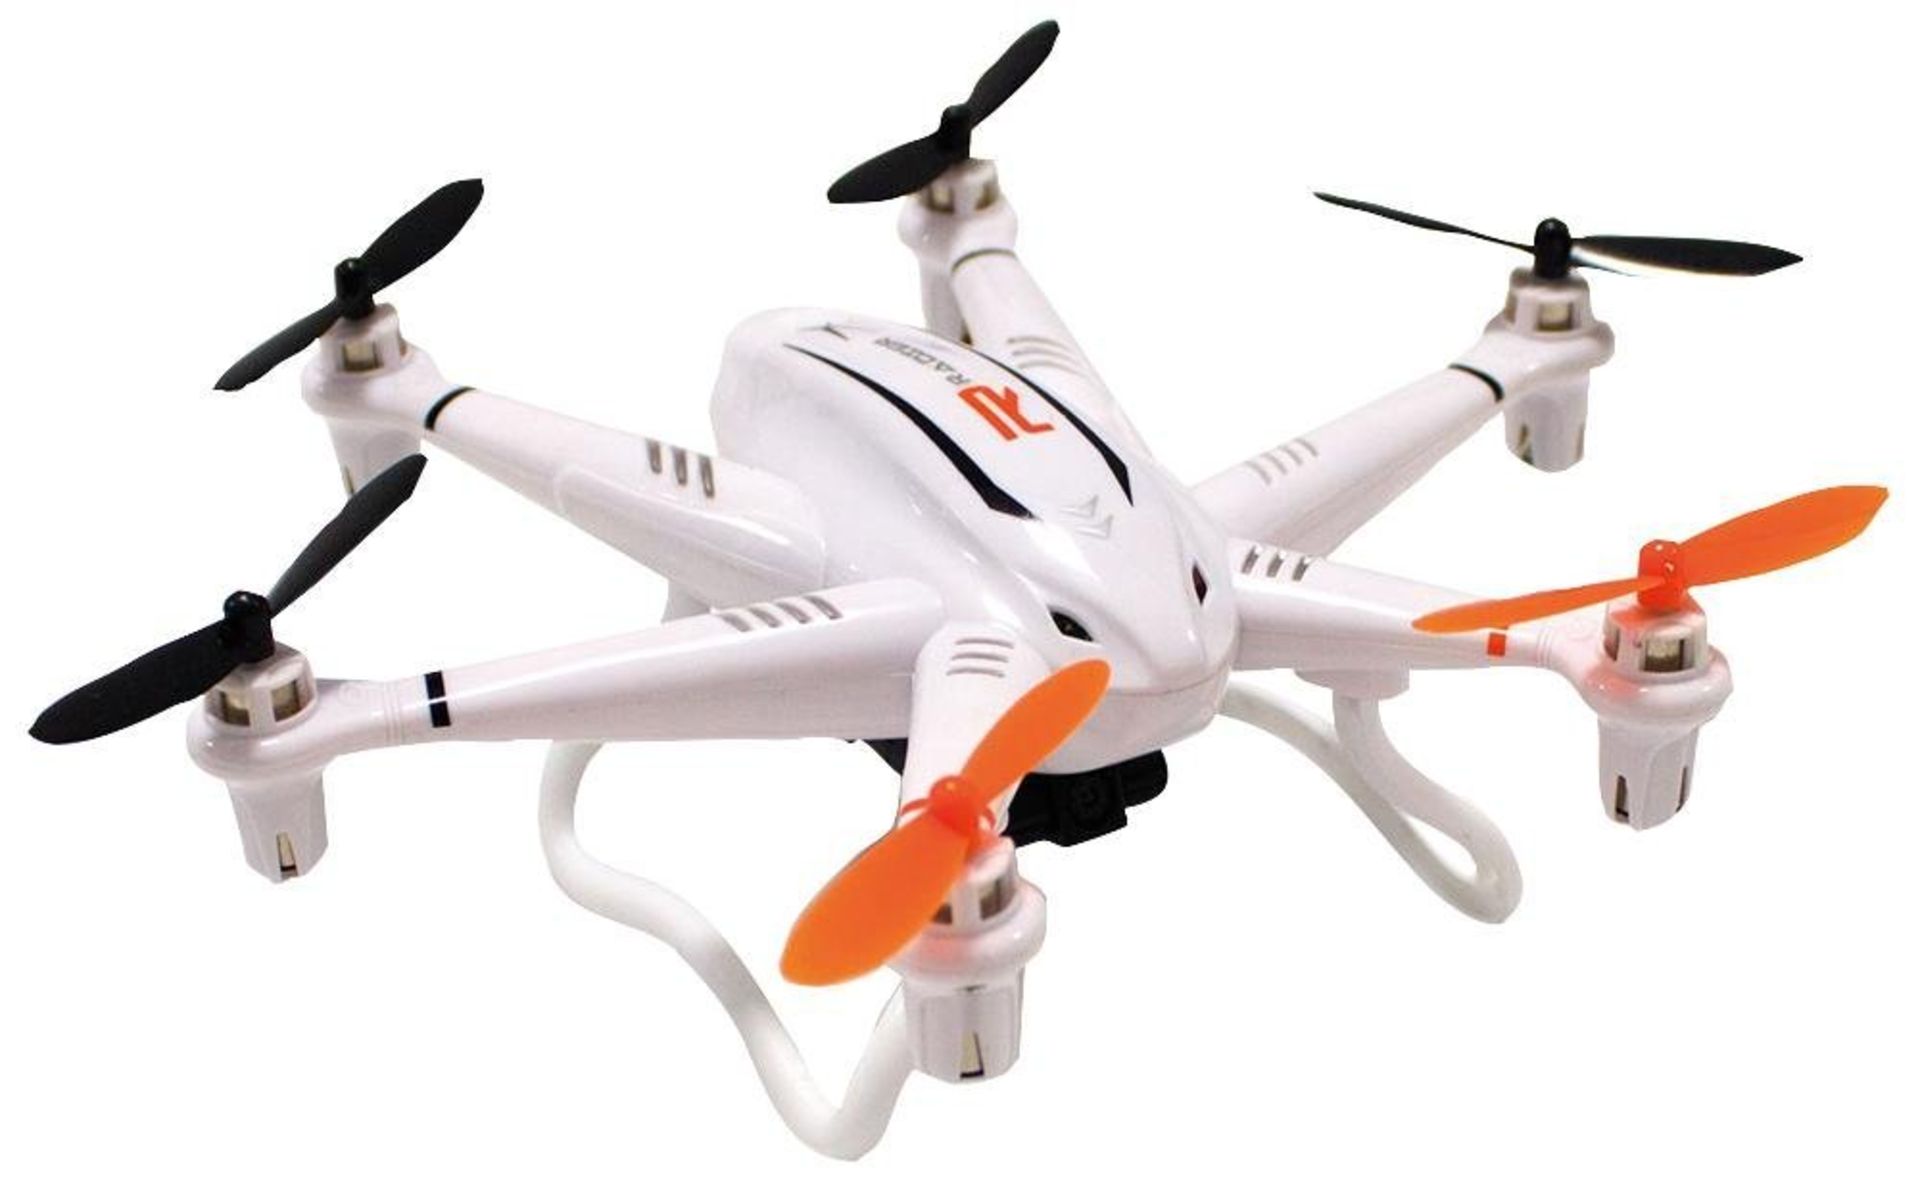 V Brand New R/C Orbit Explorer Drone With Camera - Amazon Price £53.95 X 2 YOUR BID PRICE TO BE